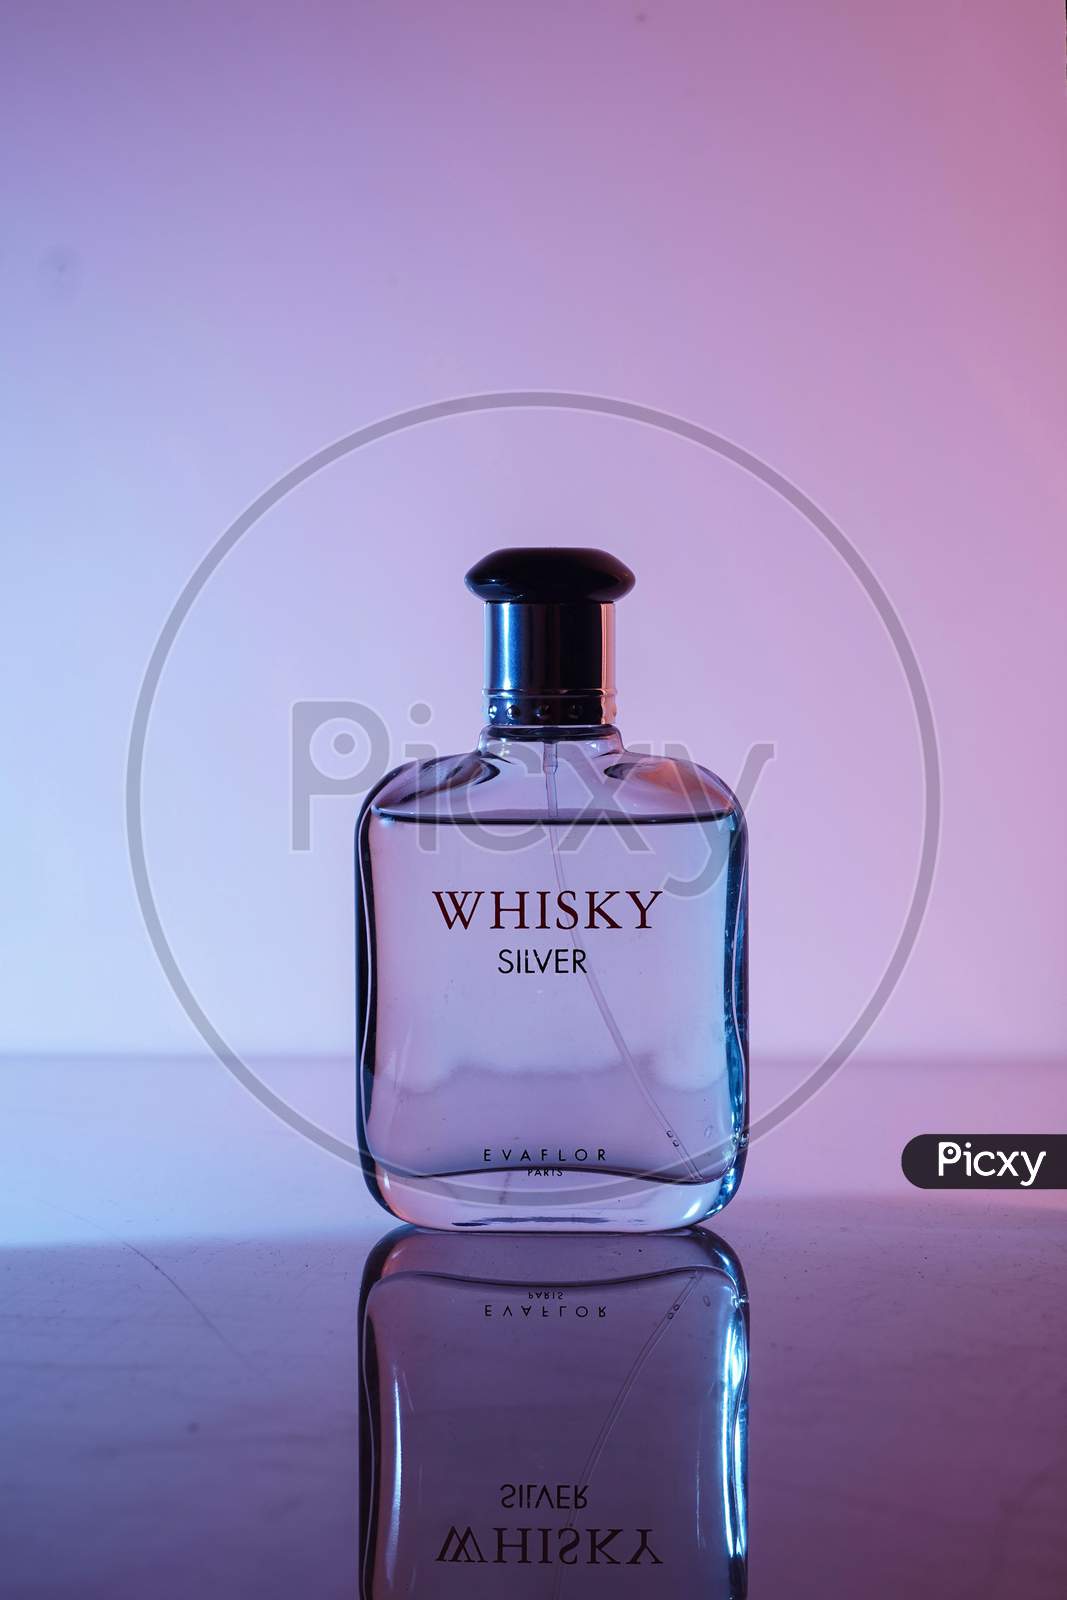 Perfume photography